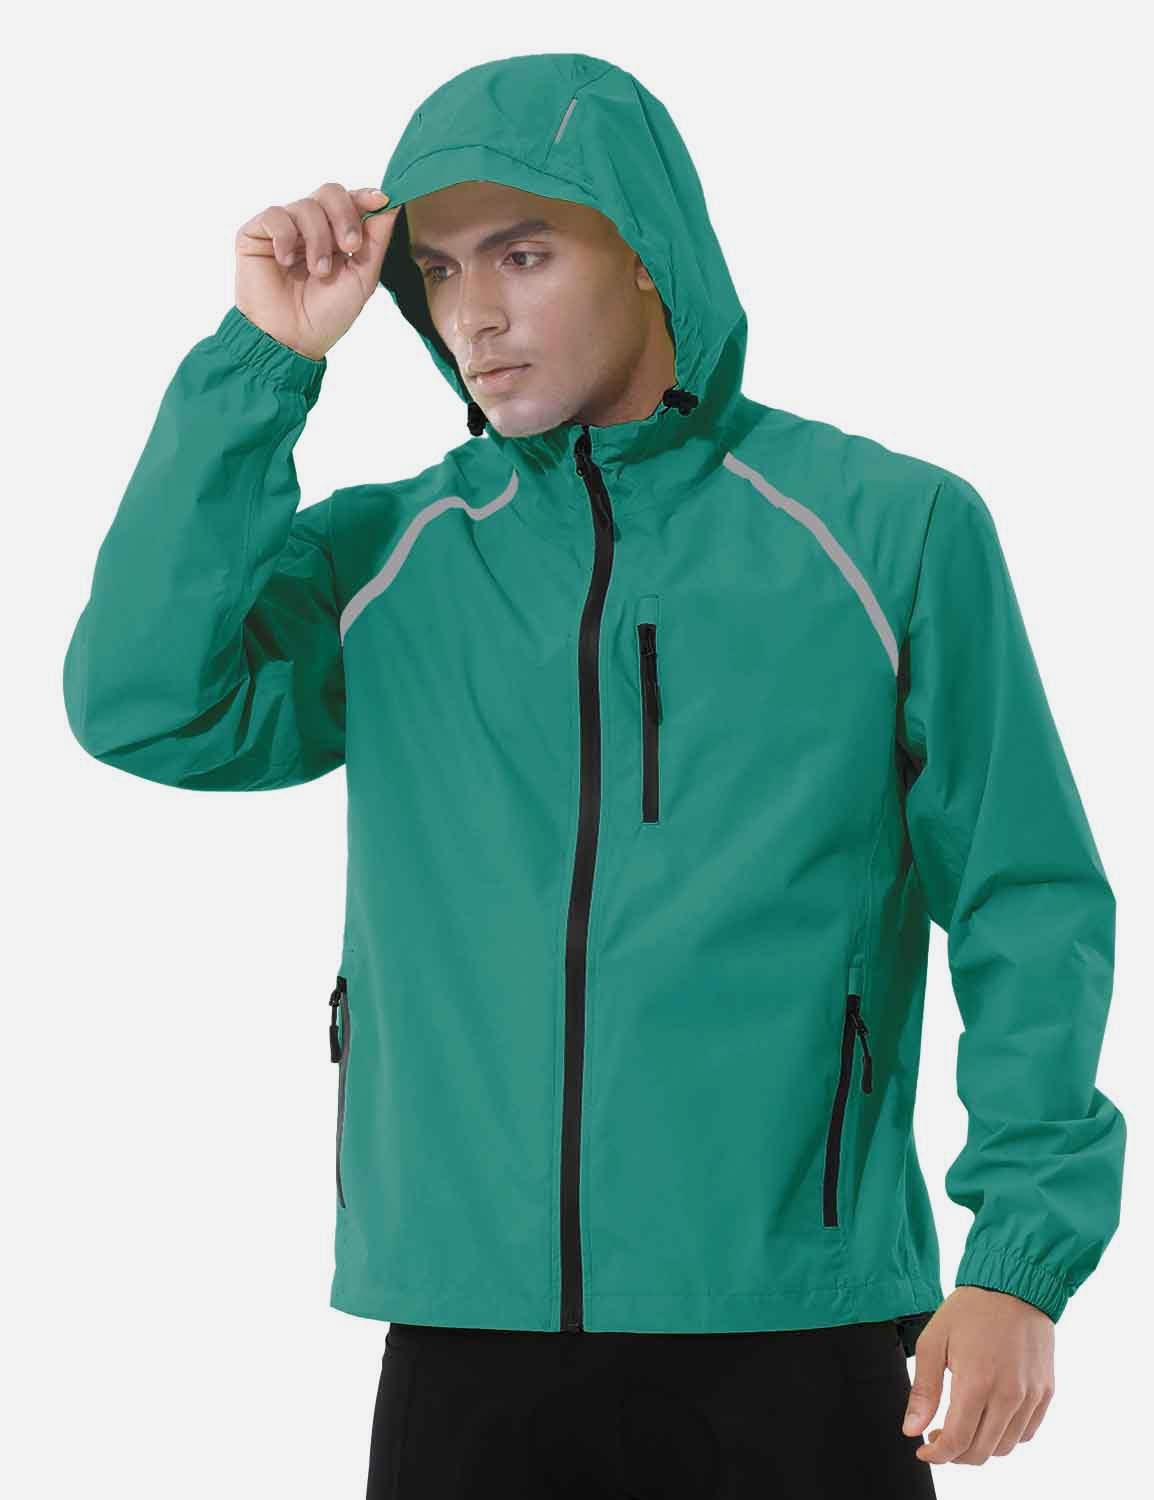 Baleaf Men's Fluorescent Waterproof Packable Windbreaker Track Jacket aaa467 Teal Green Front